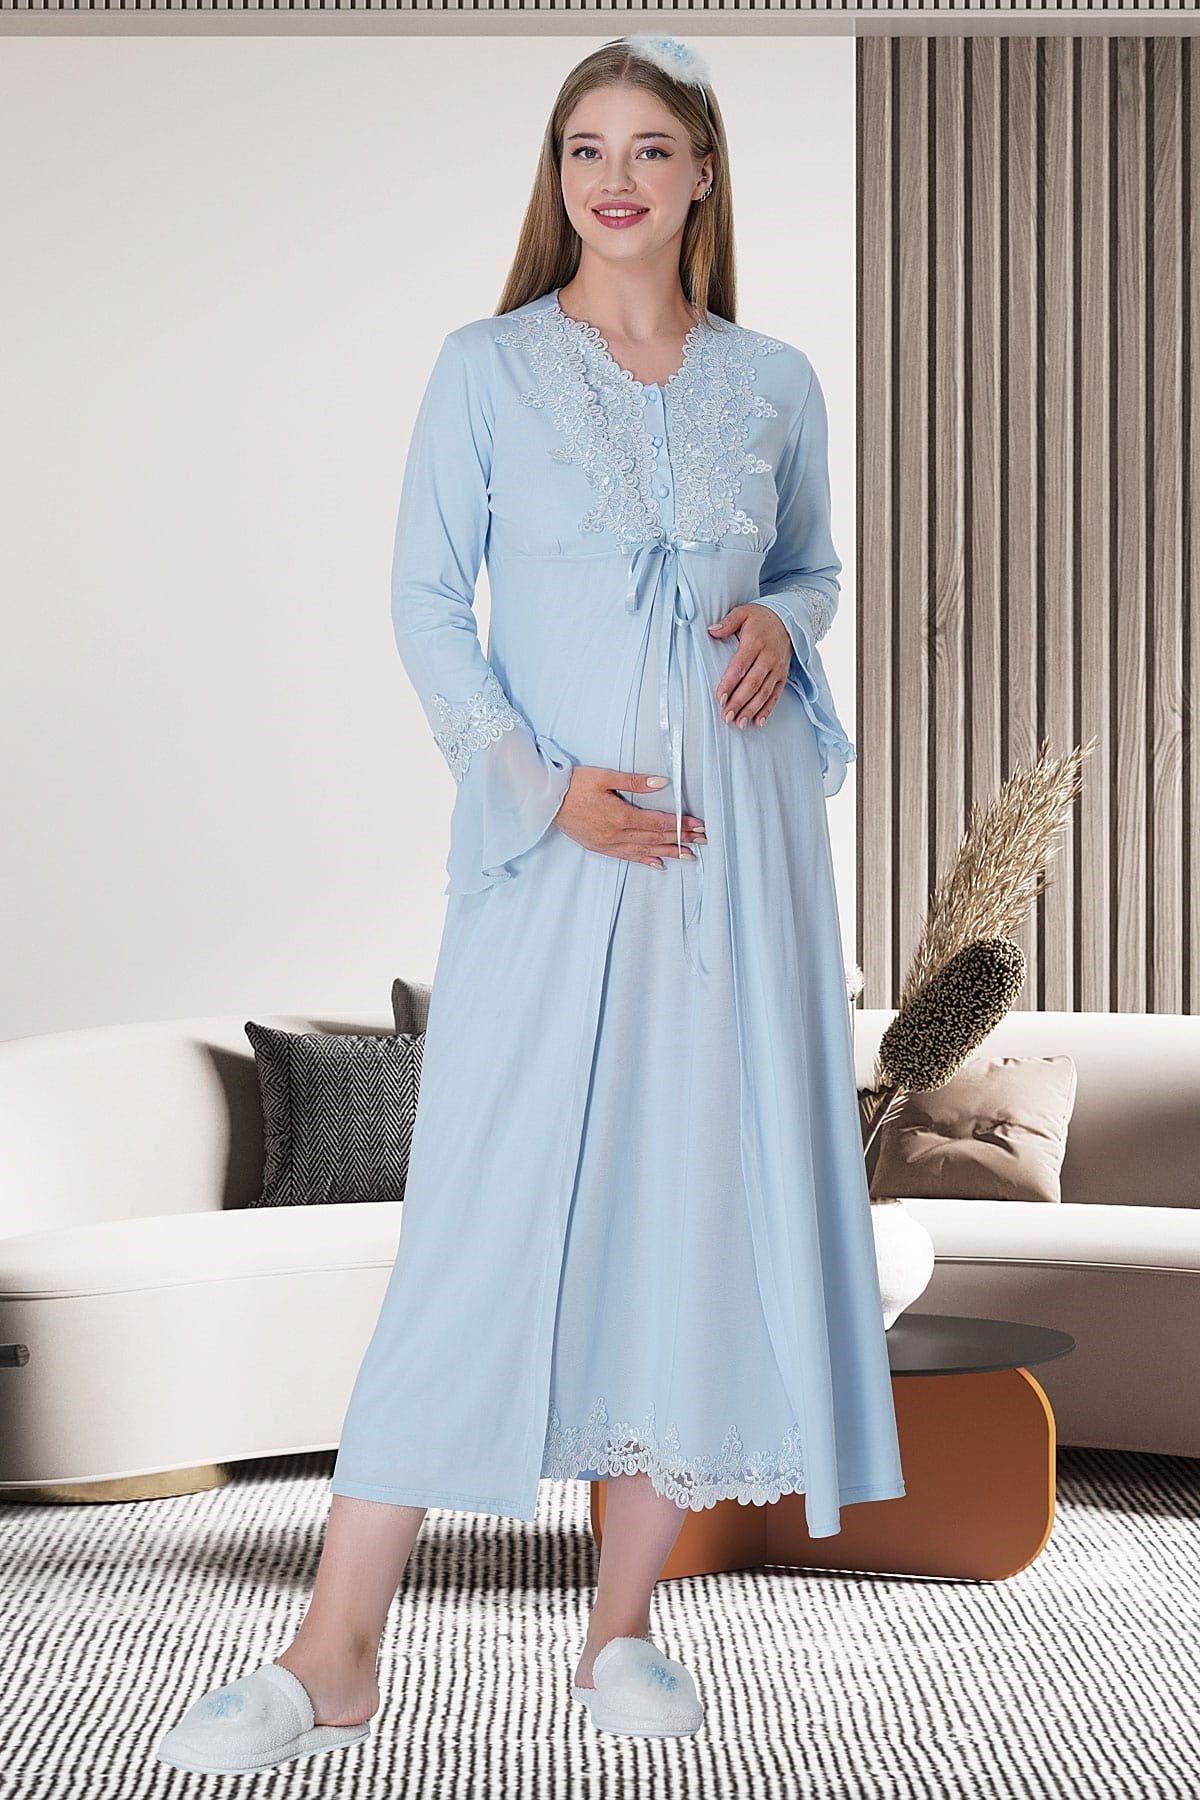 Shopymommy 5415 Elegant Lace Maternity & Nursing Nightgown Blue